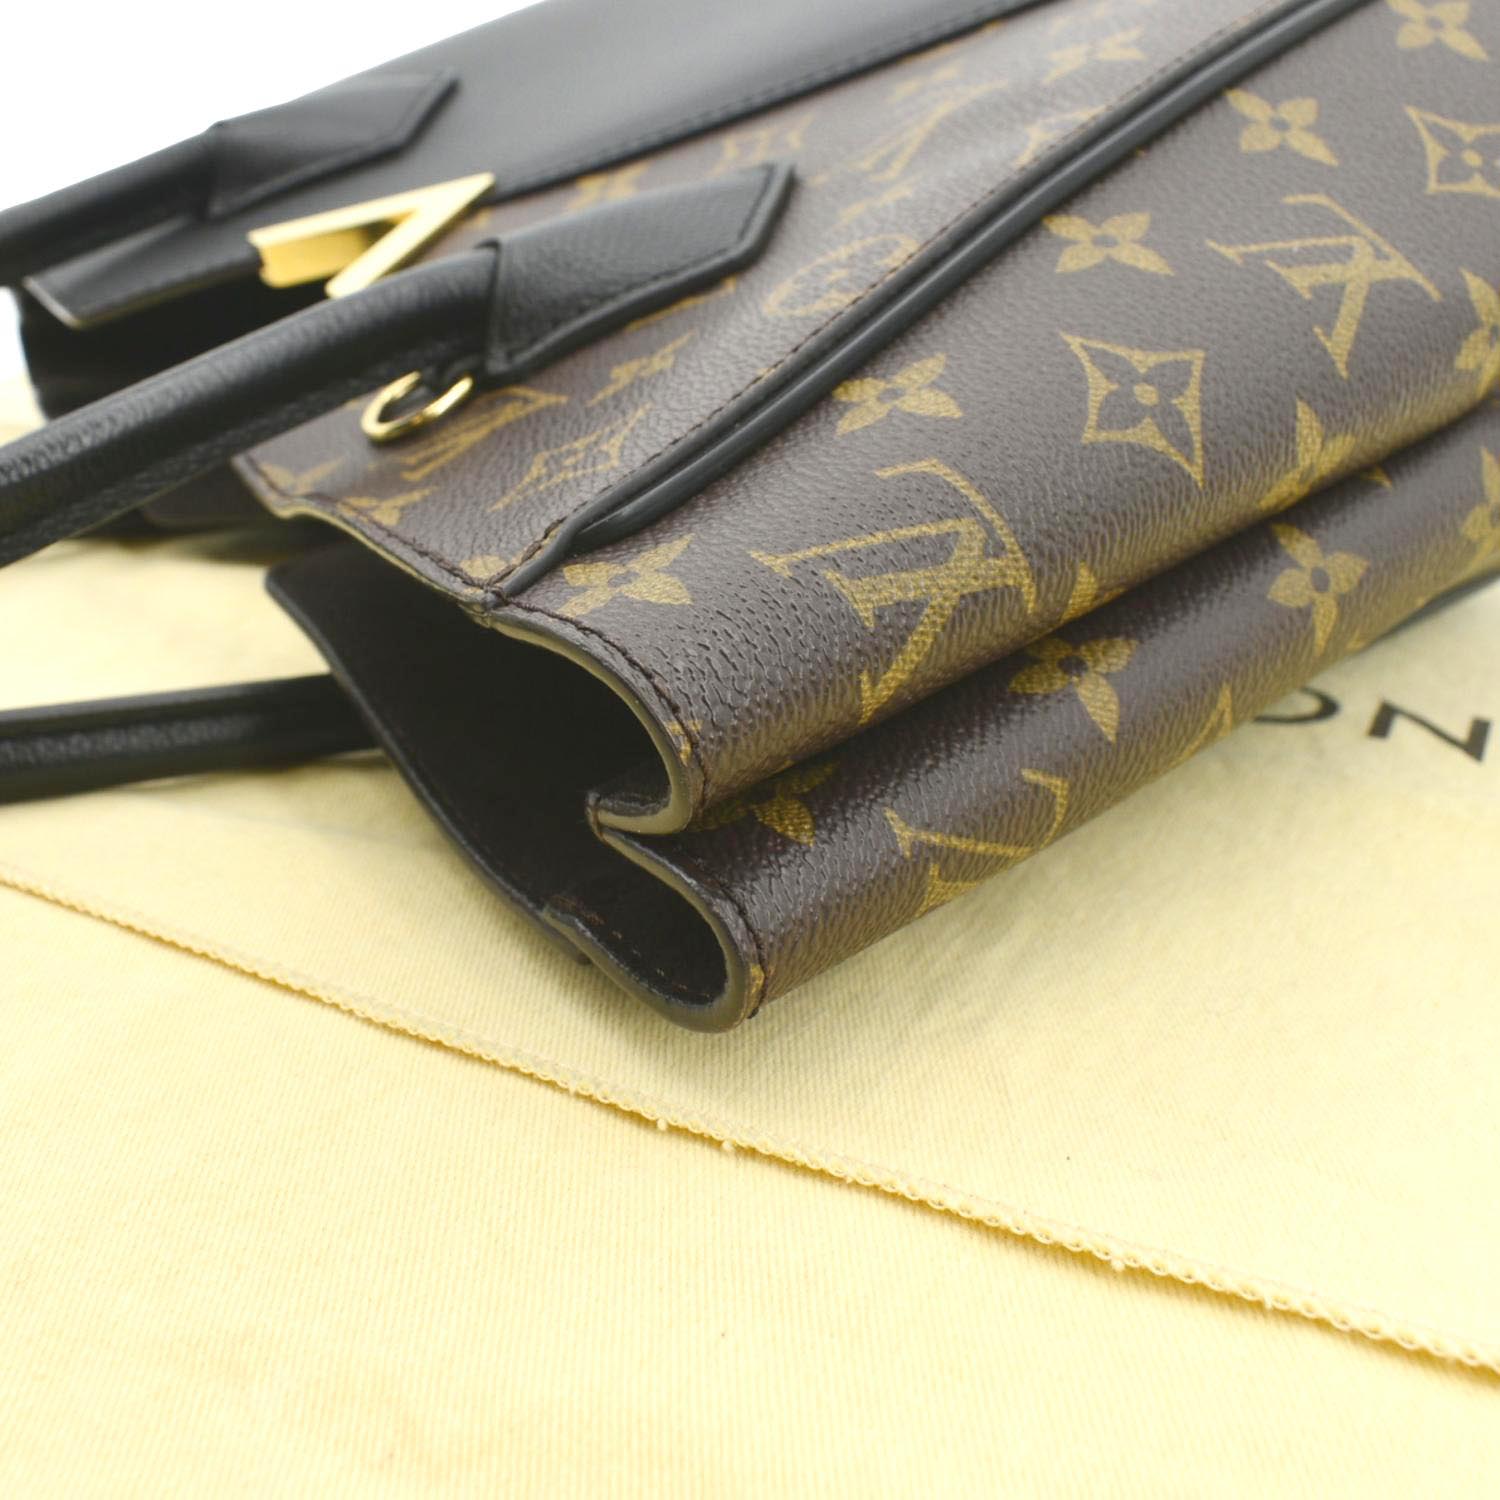 Louis Vuitton Kimono PM Monogram Canvas and Leather Two-way Tote Bag